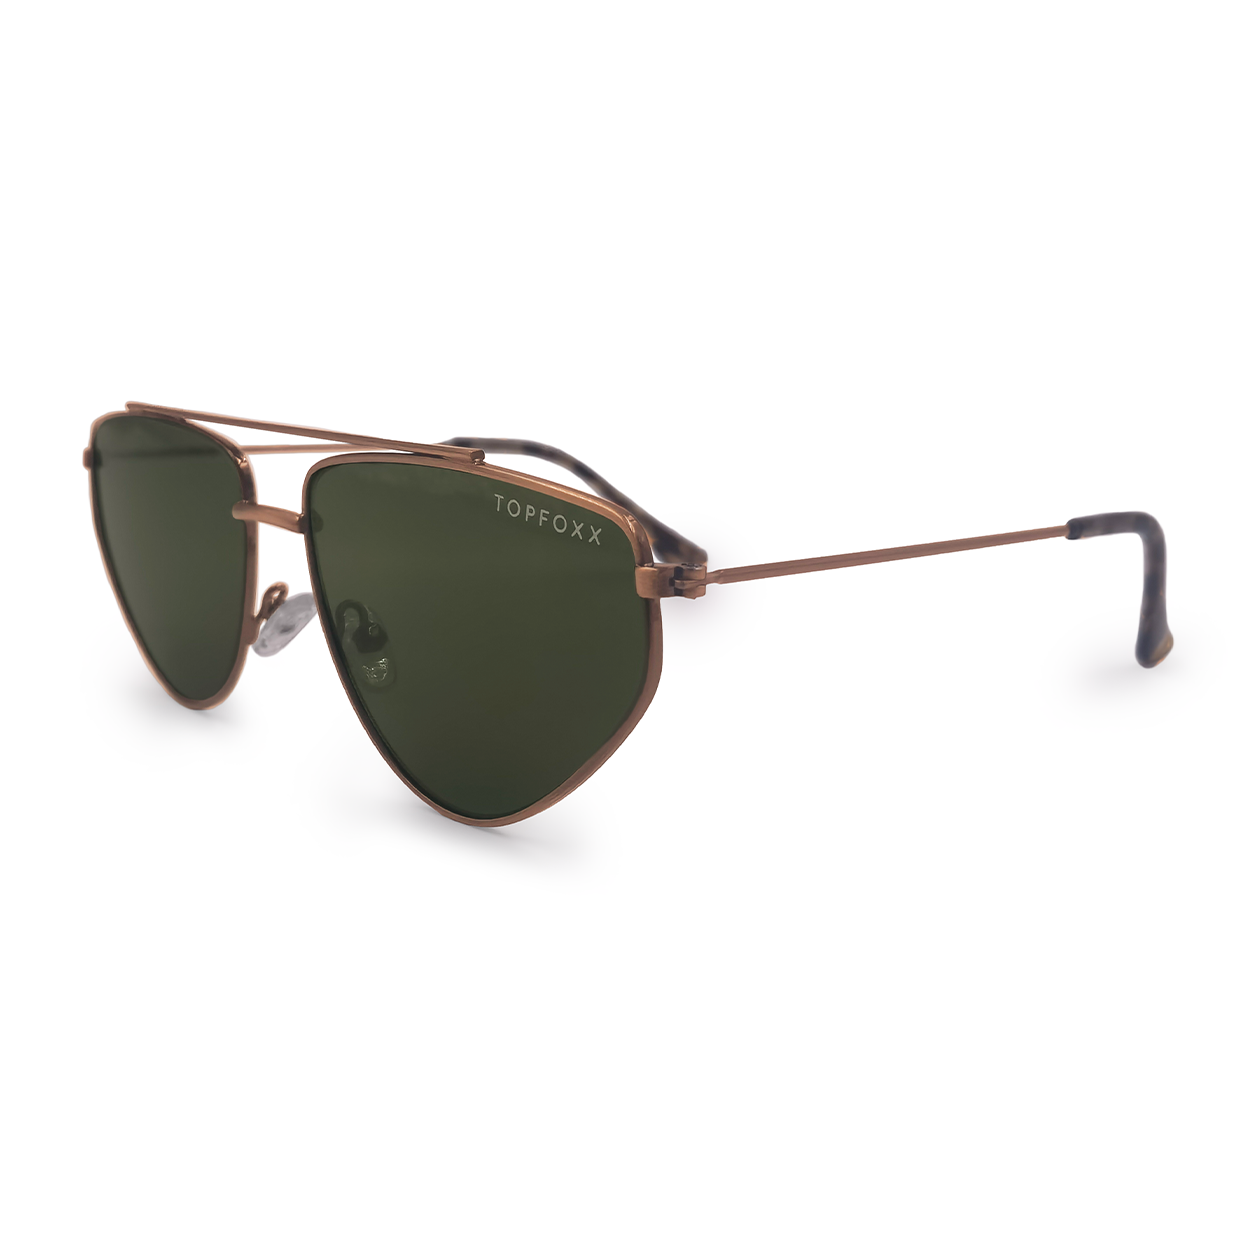 TopFoxx - Hasta La Vista - Dark Green Cat-Eye Aviator Sunglasses for Women - Unique Aviators - Side Profile